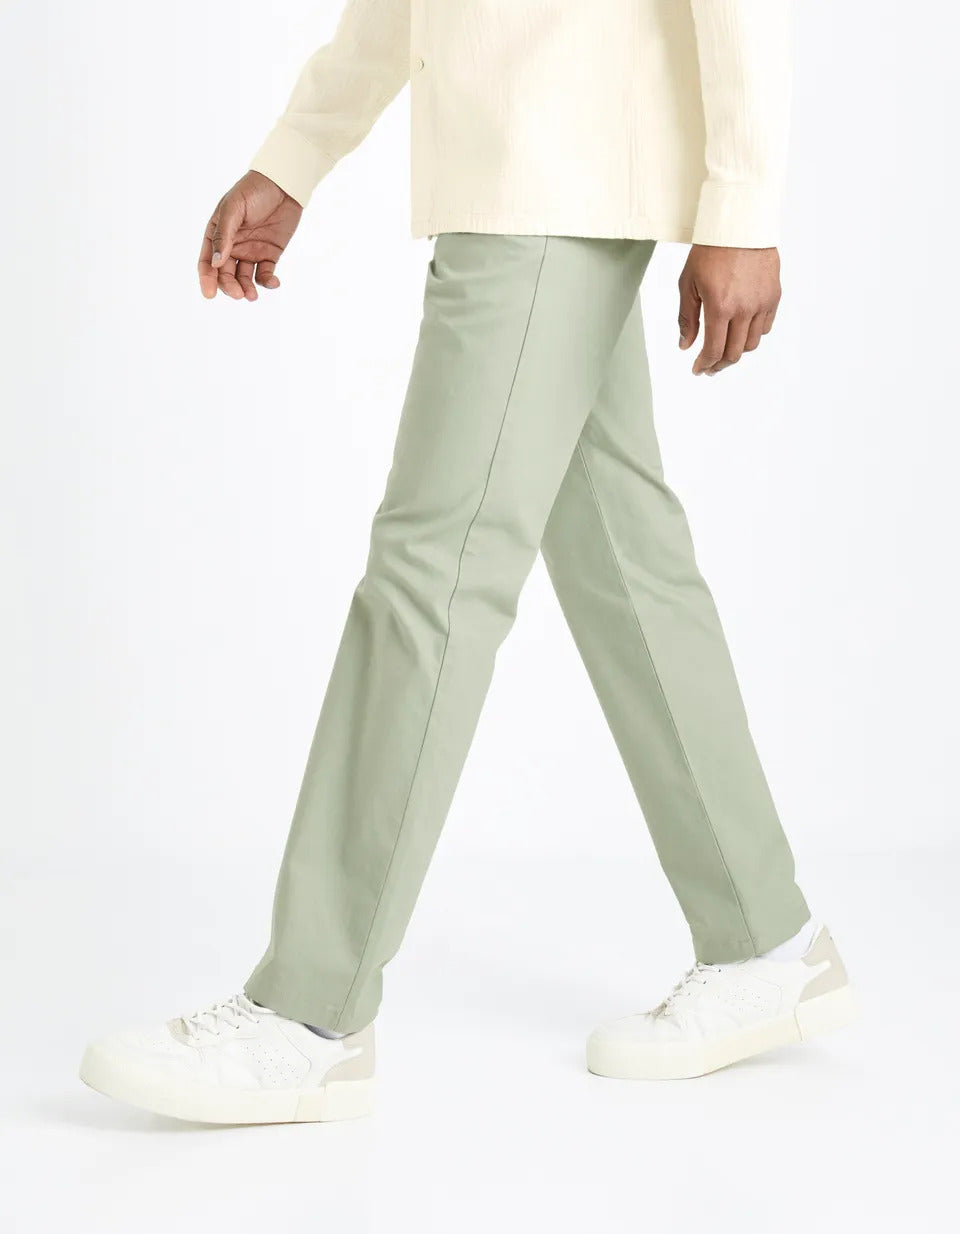 Grey Chino Trousers